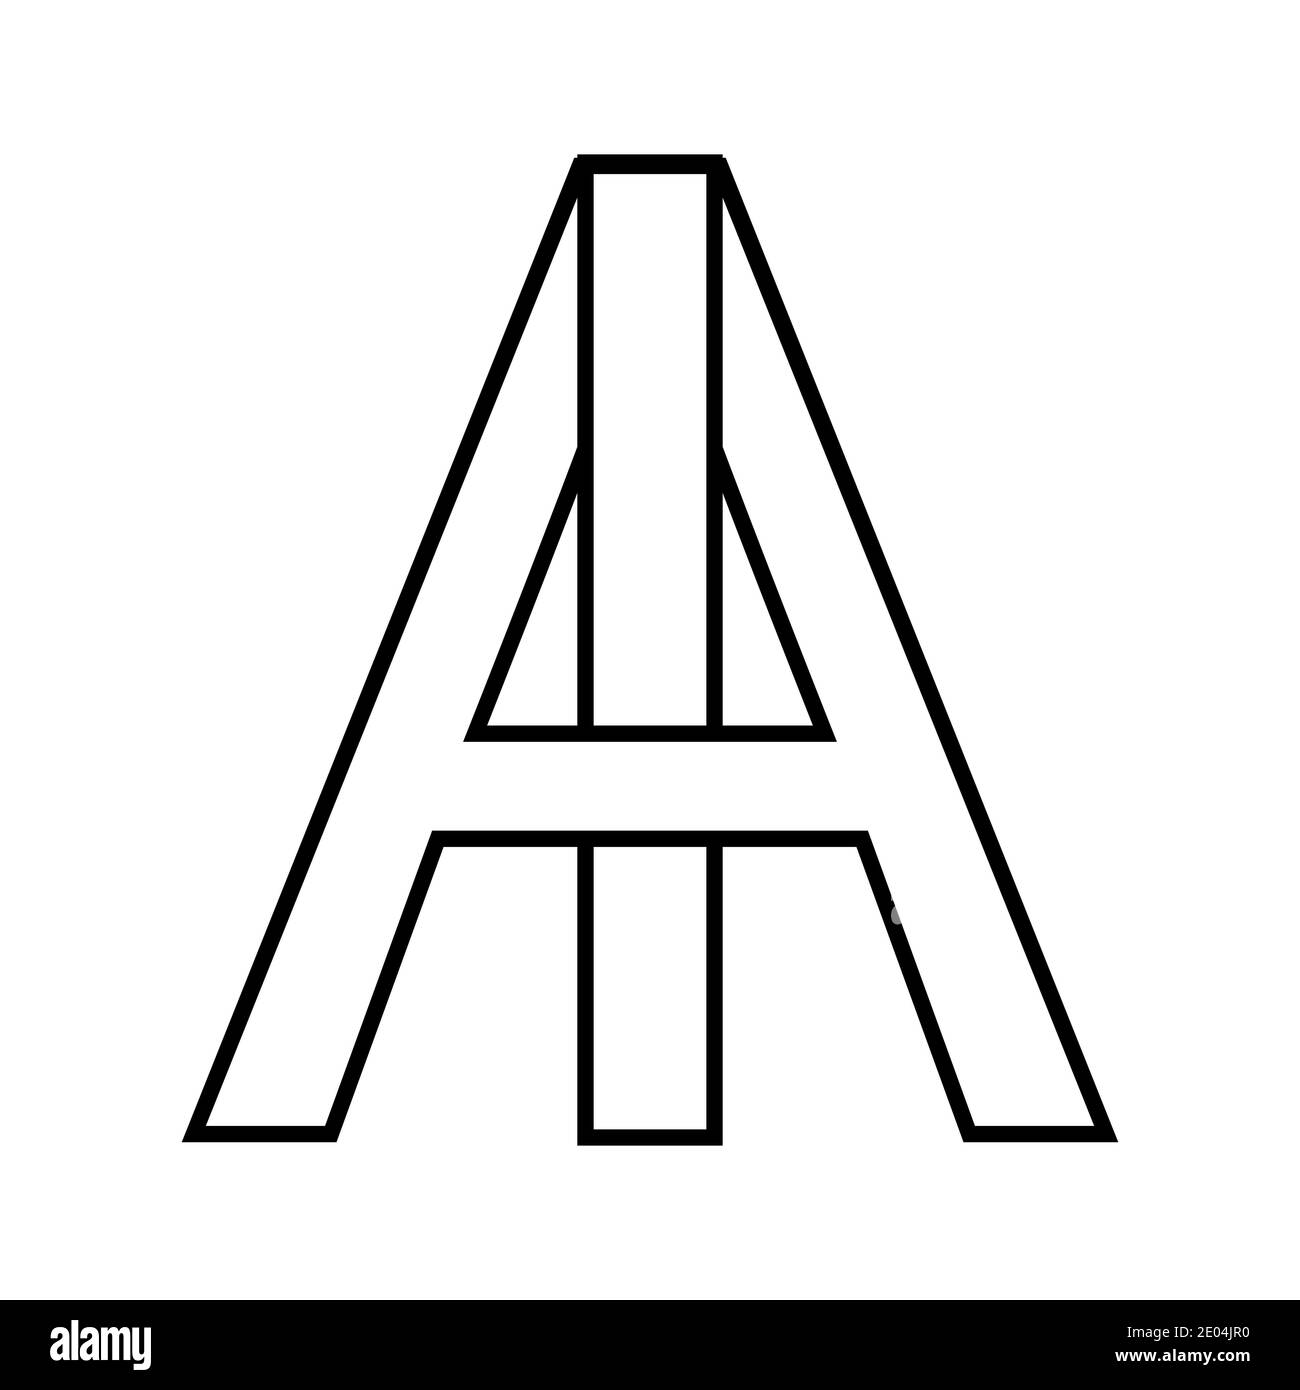 Logo ai Symbol Zeichen zwei Zeilensprungbuchstaben A, i Vektor Logo ai erste Großbuchstaben Muster Alphabet A, i Stock Vektor